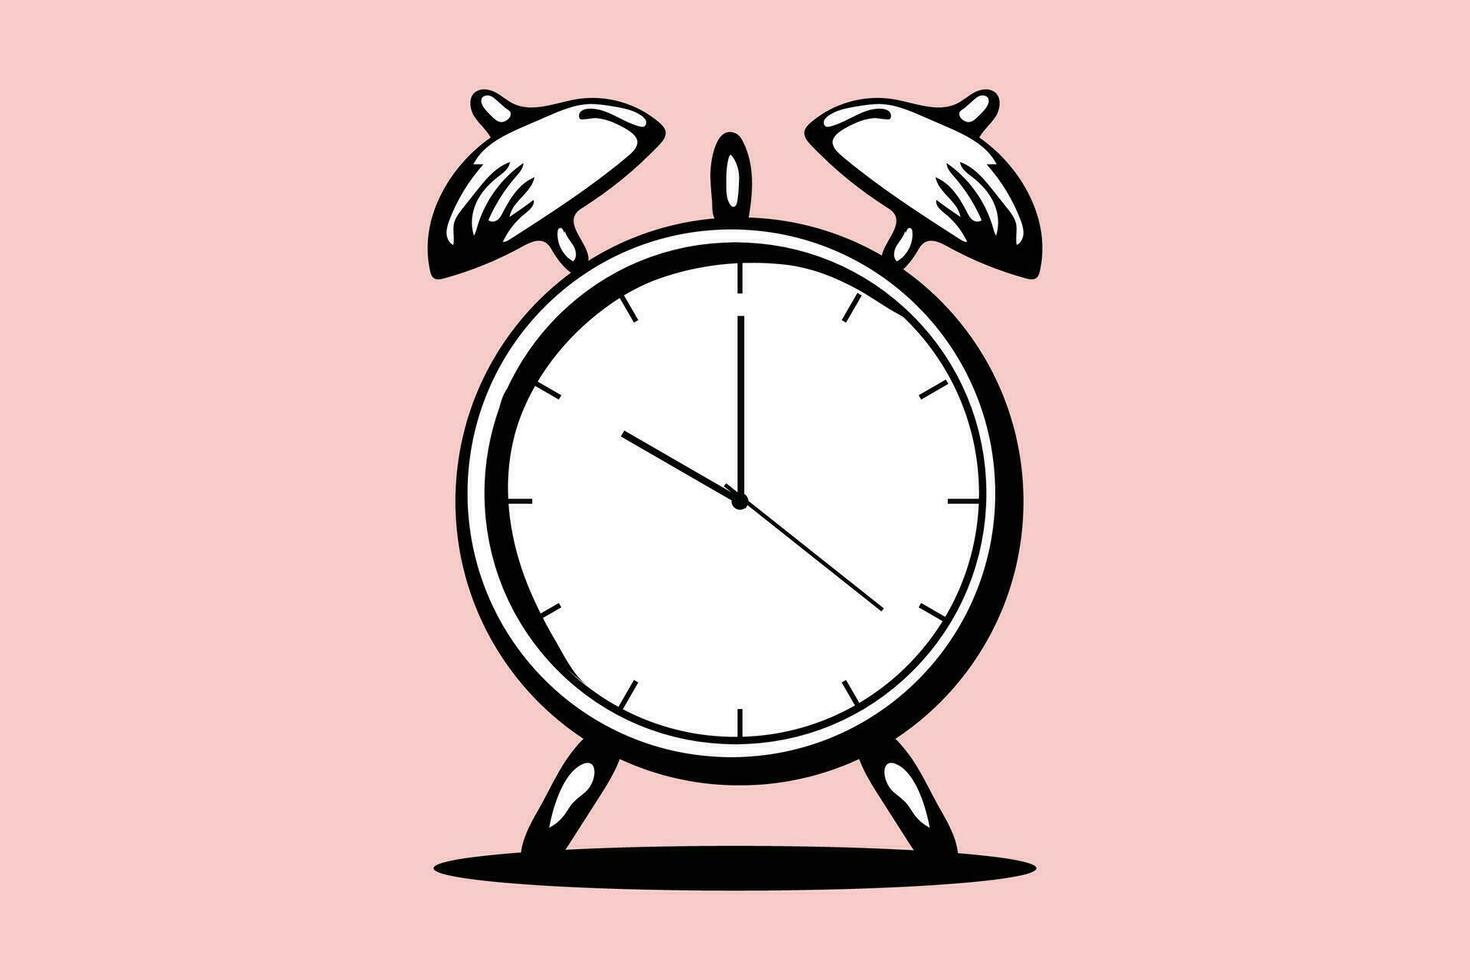 Alarm Clock silhouette vector illustration